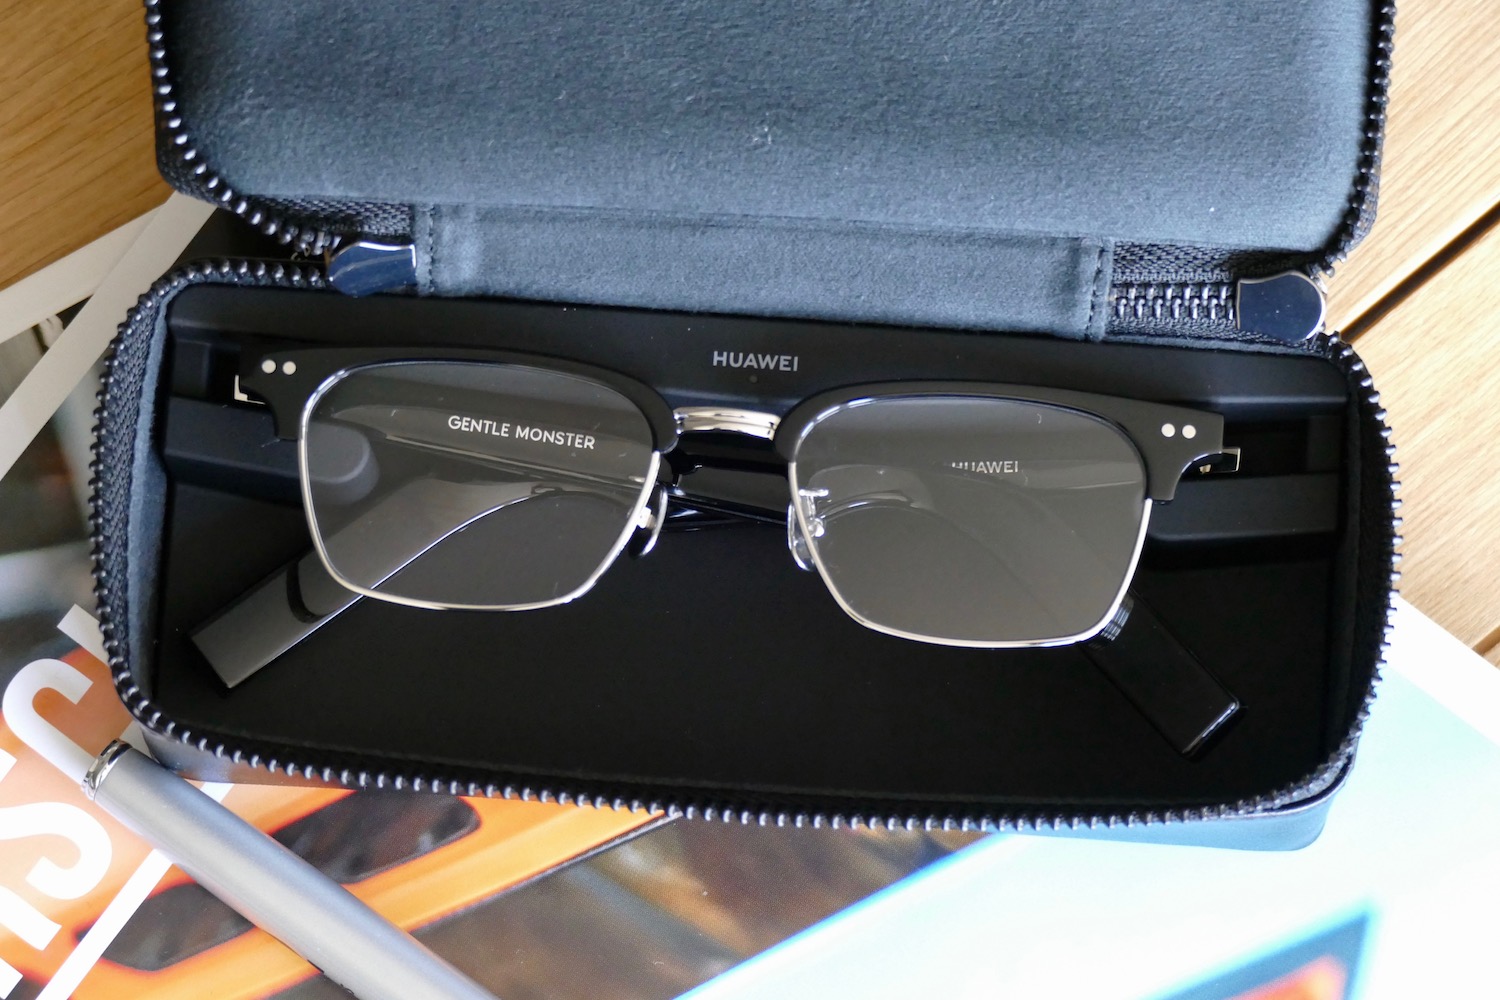 Huawei Eyewear 2 Smartglasses Are Headphones for Your Face | Digital Trends